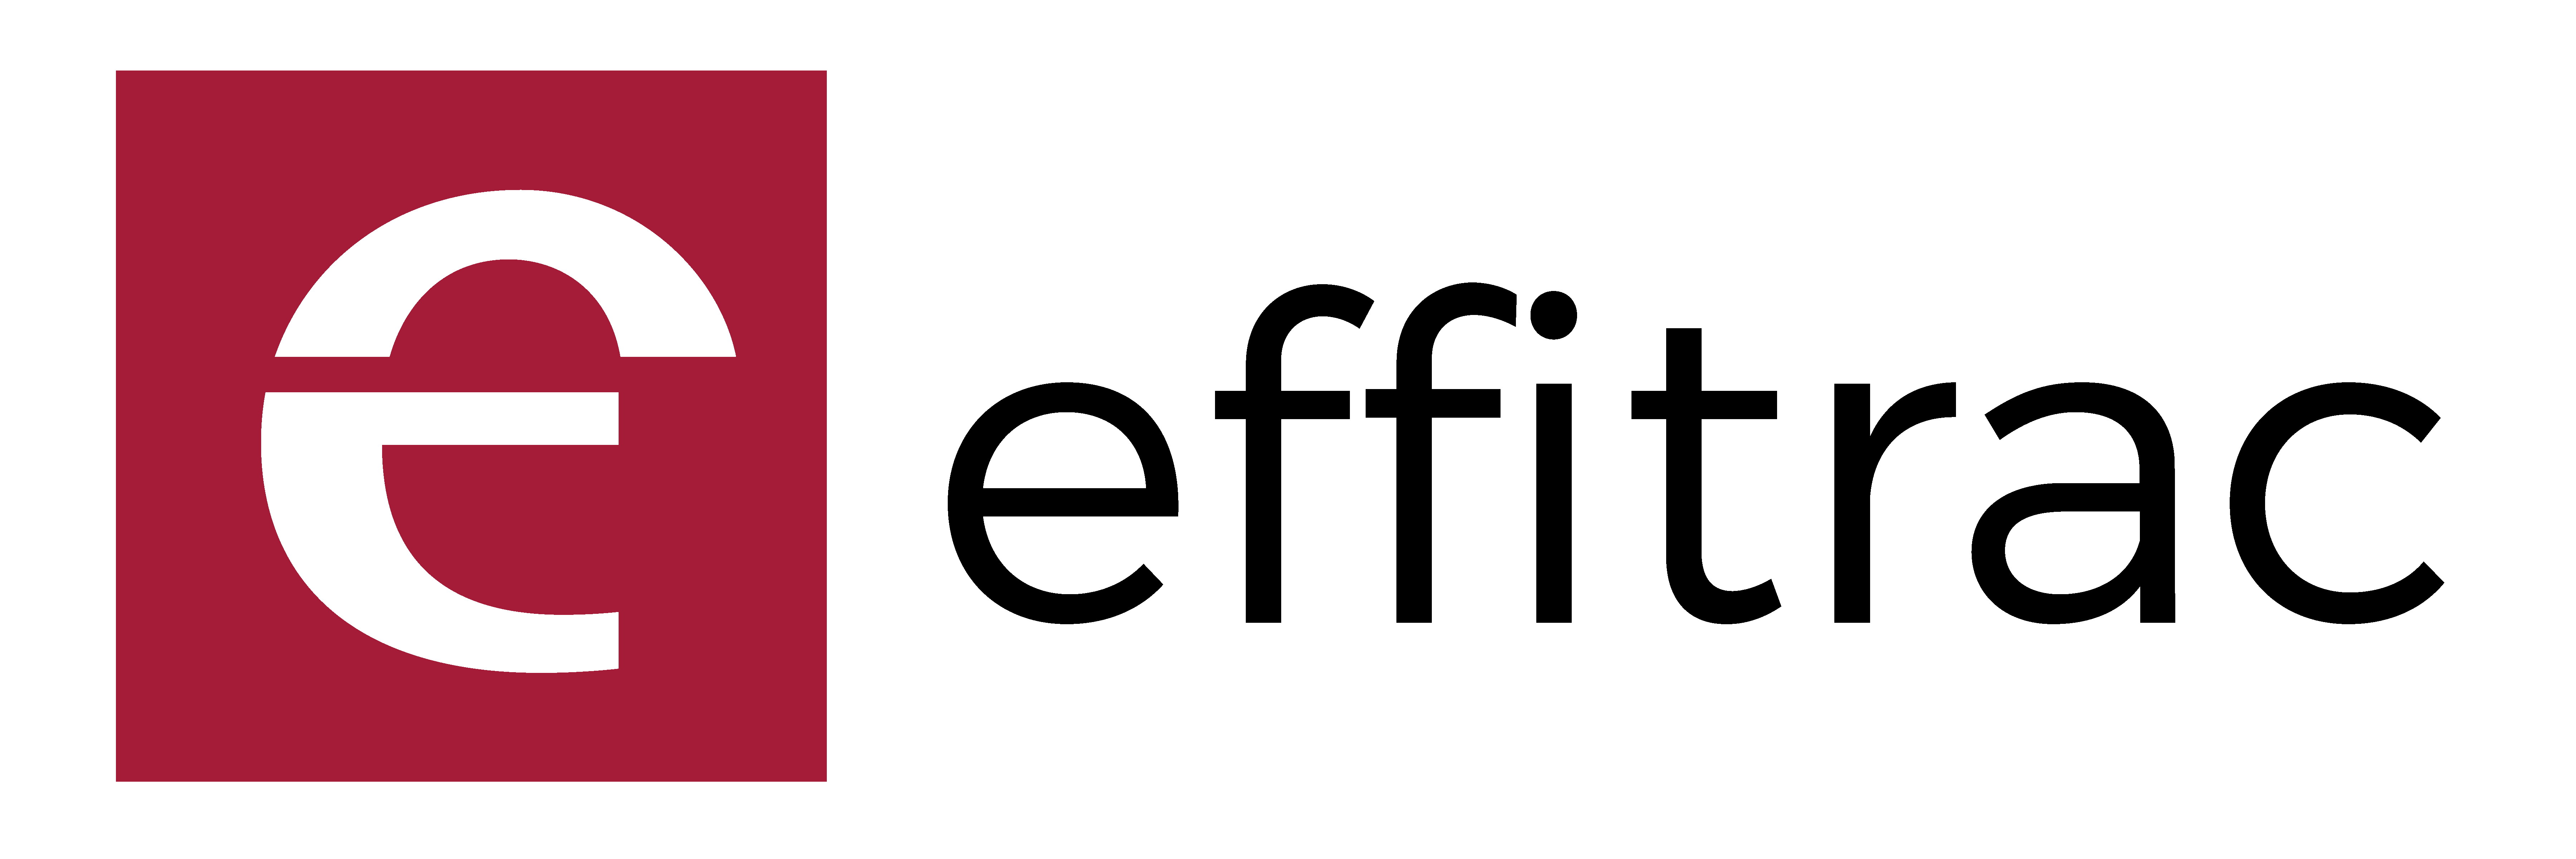 Efr_Logo